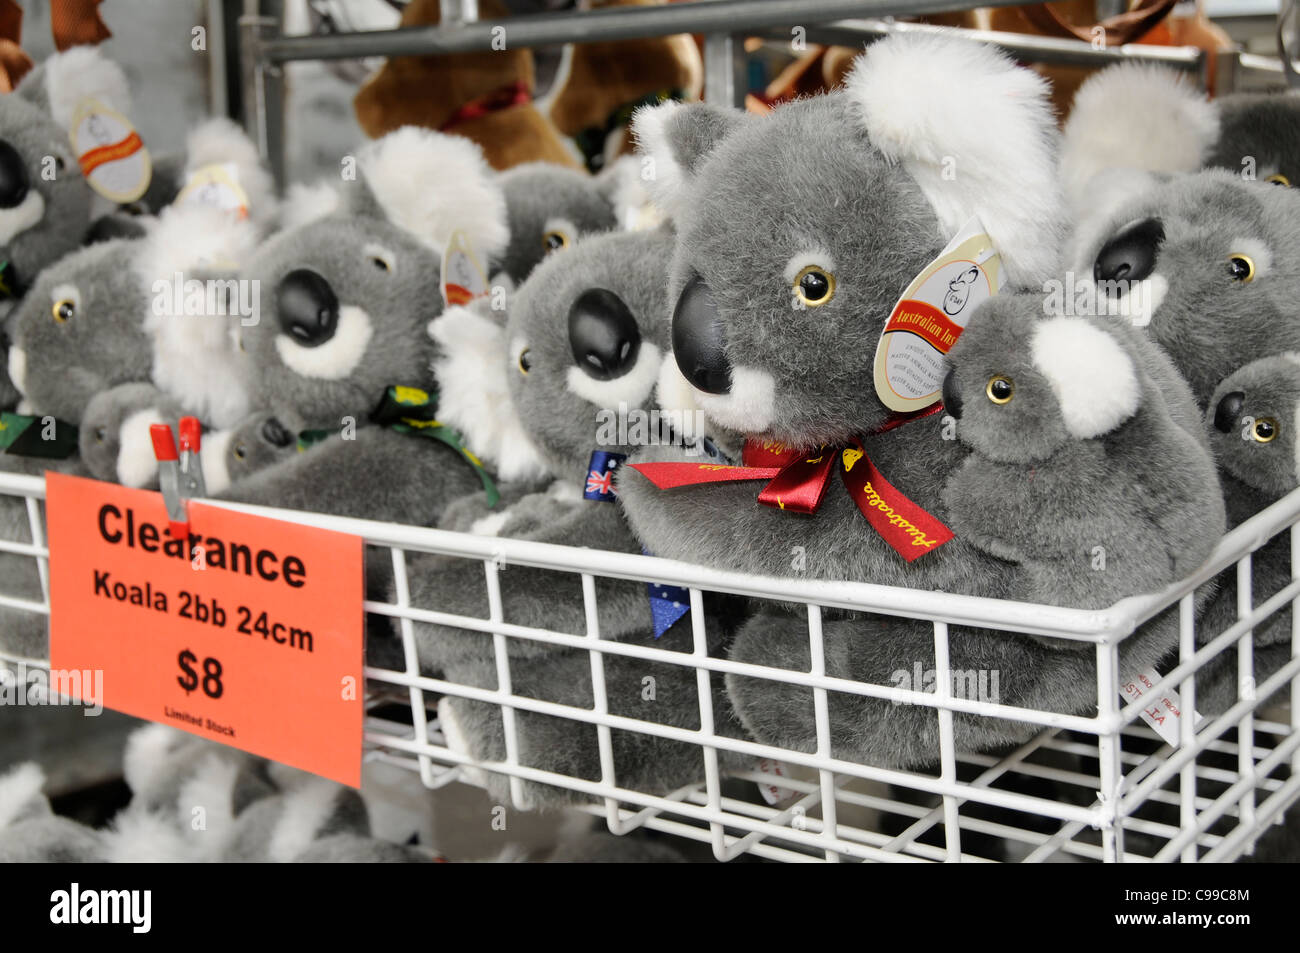 Cuddly koala toys in a souvenir stall at Queen Victoria Market in Melbourne, Australia Stock Photo